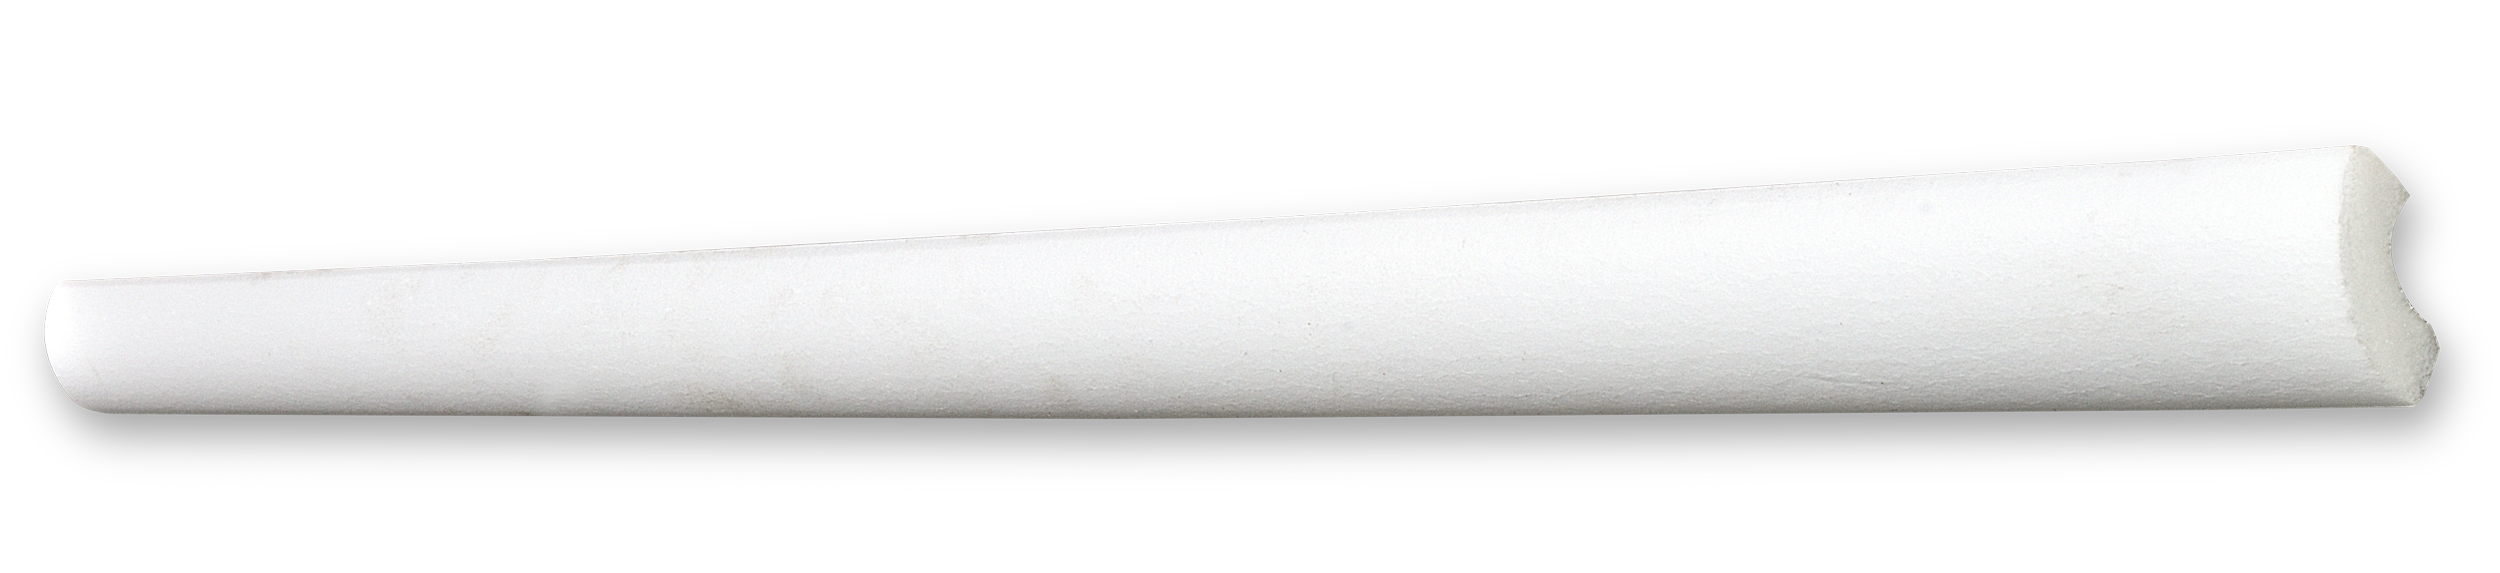 Decosa Zierprofil H15 (Susanna), weiß, 20 x 20 mm, Länge: 2 m